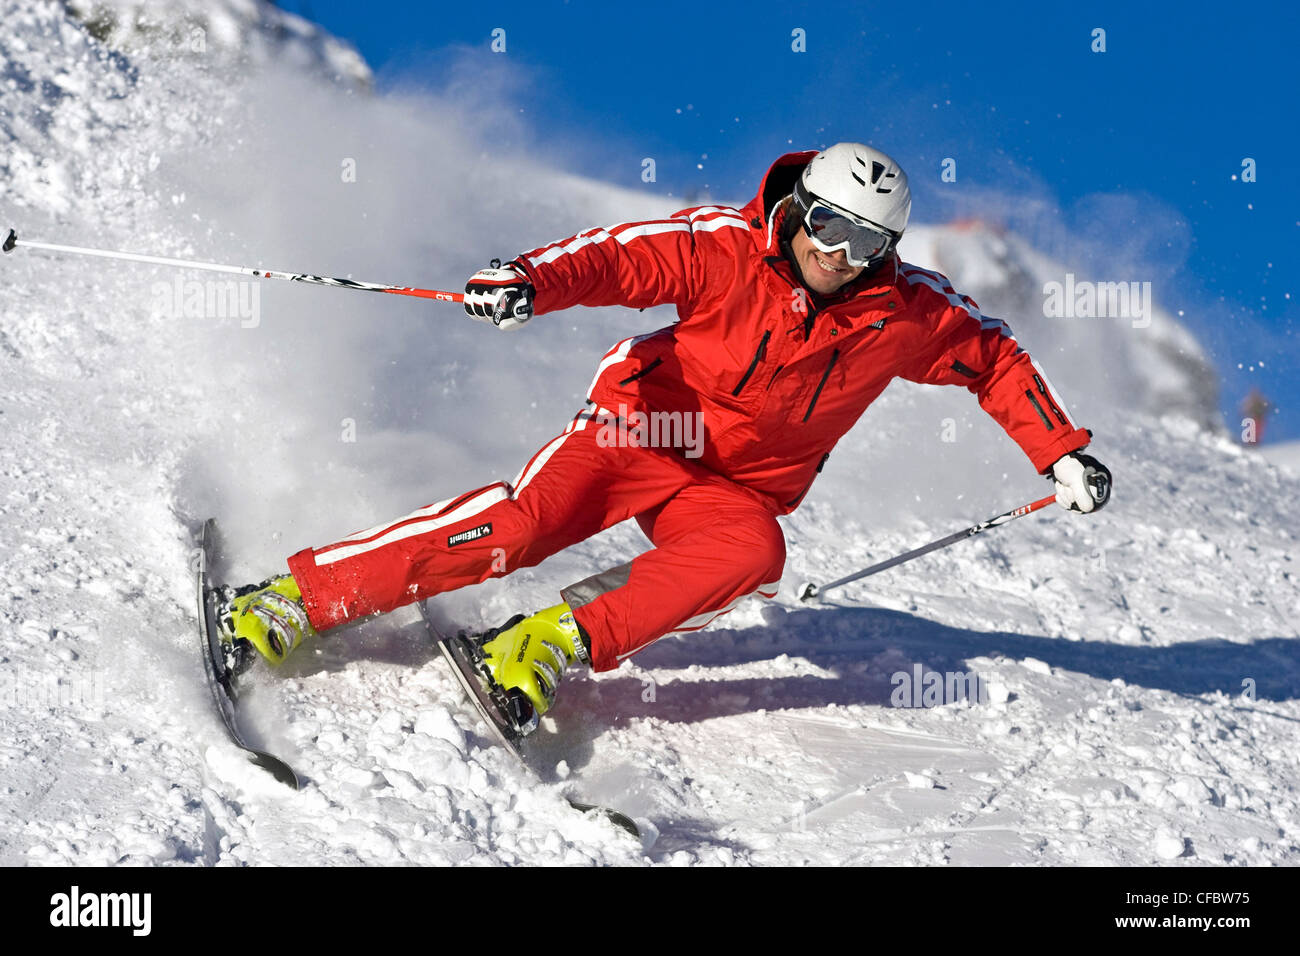 Carving, skiing, Extreme, man, ski, winter sports, fun sport